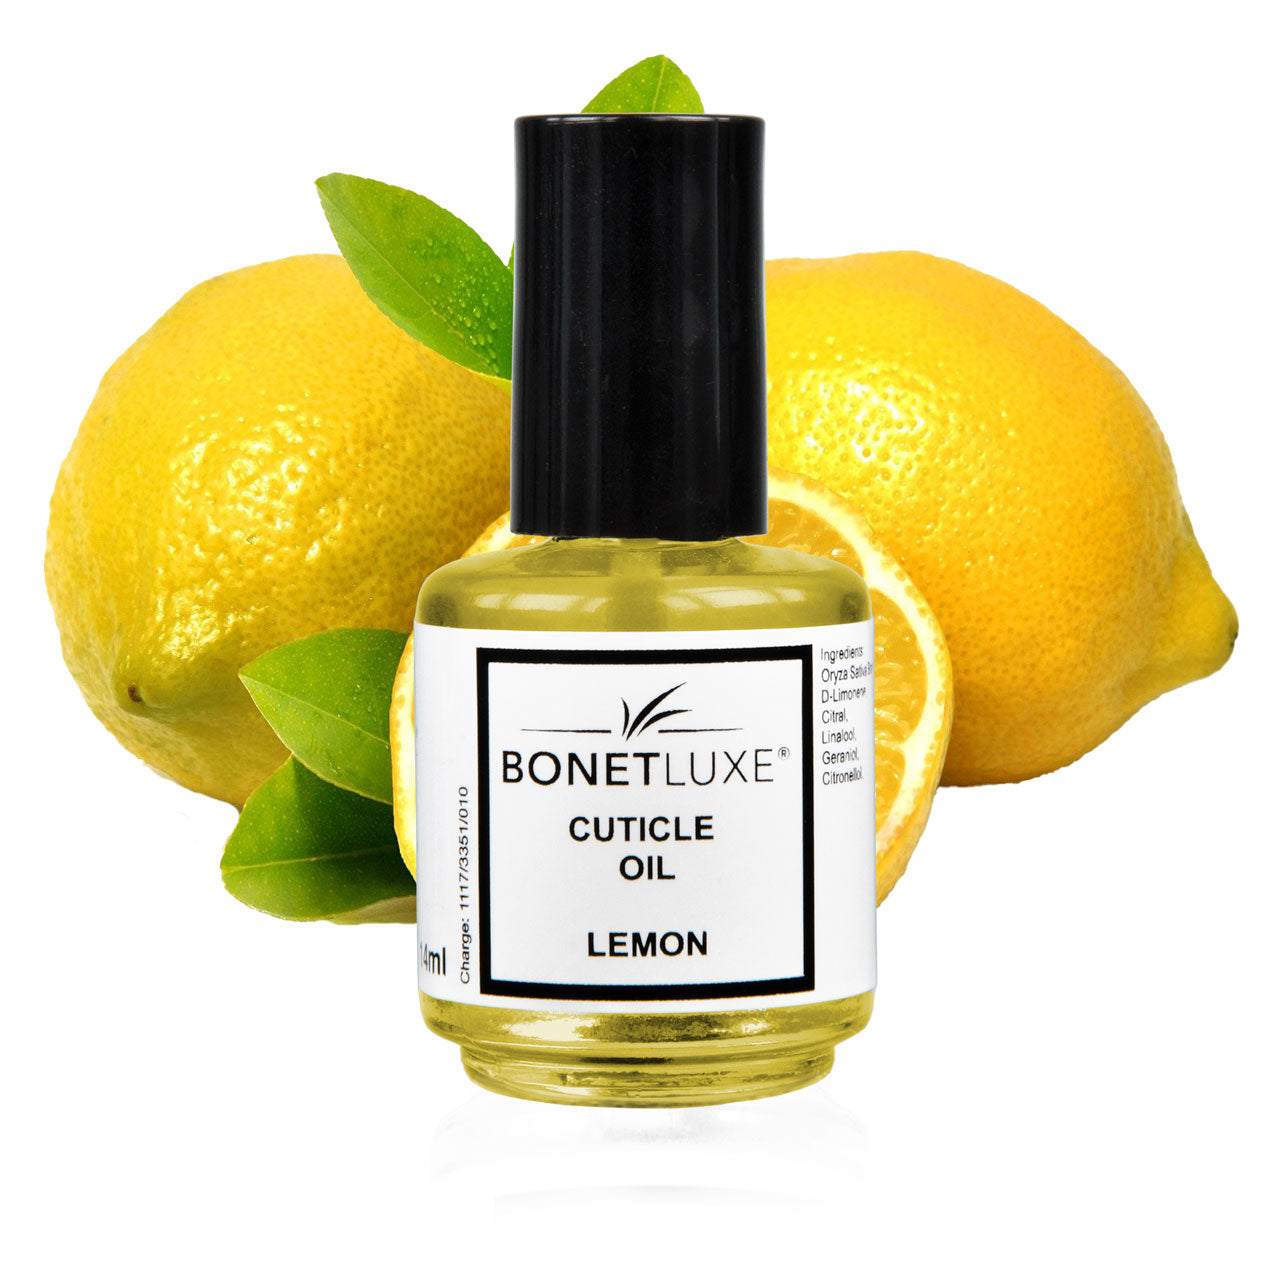 Bonetluxe Huile cuticule Lemon